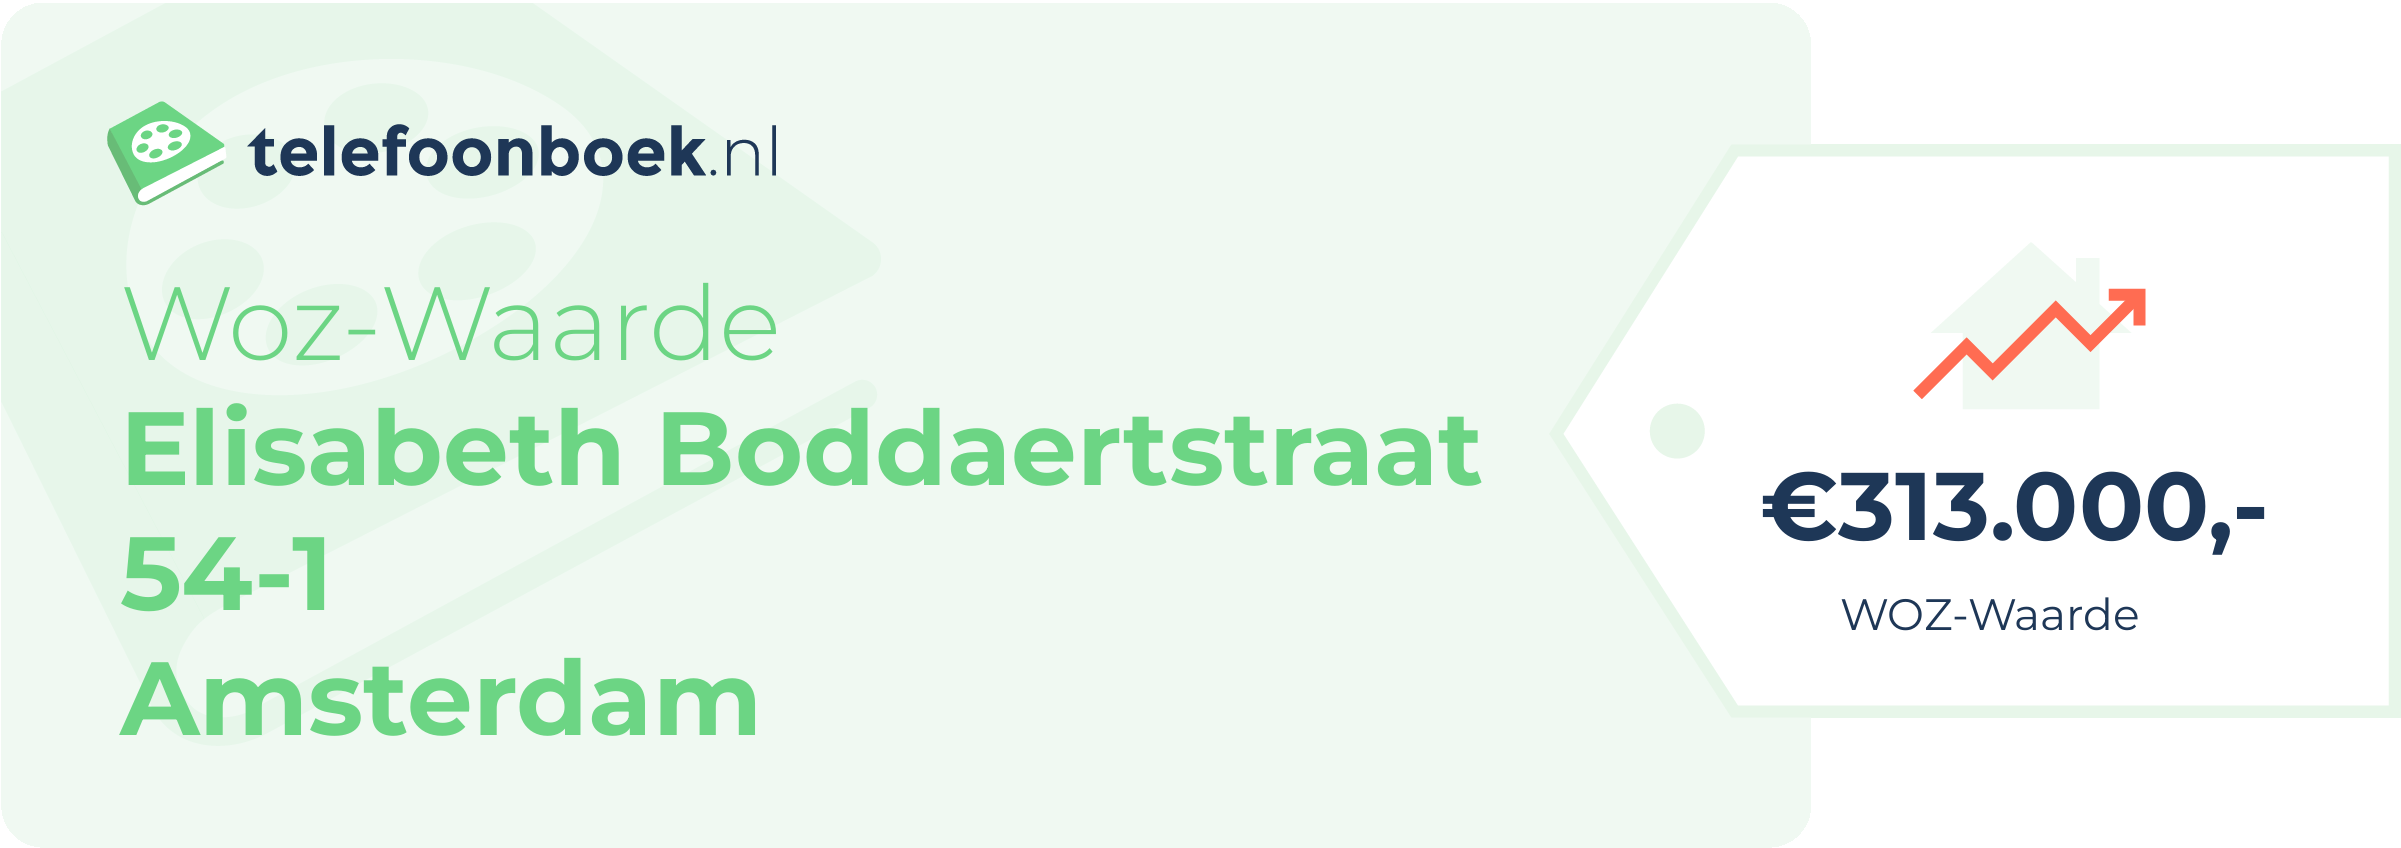 WOZ-waarde Elisabeth Boddaertstraat 54-1 Amsterdam